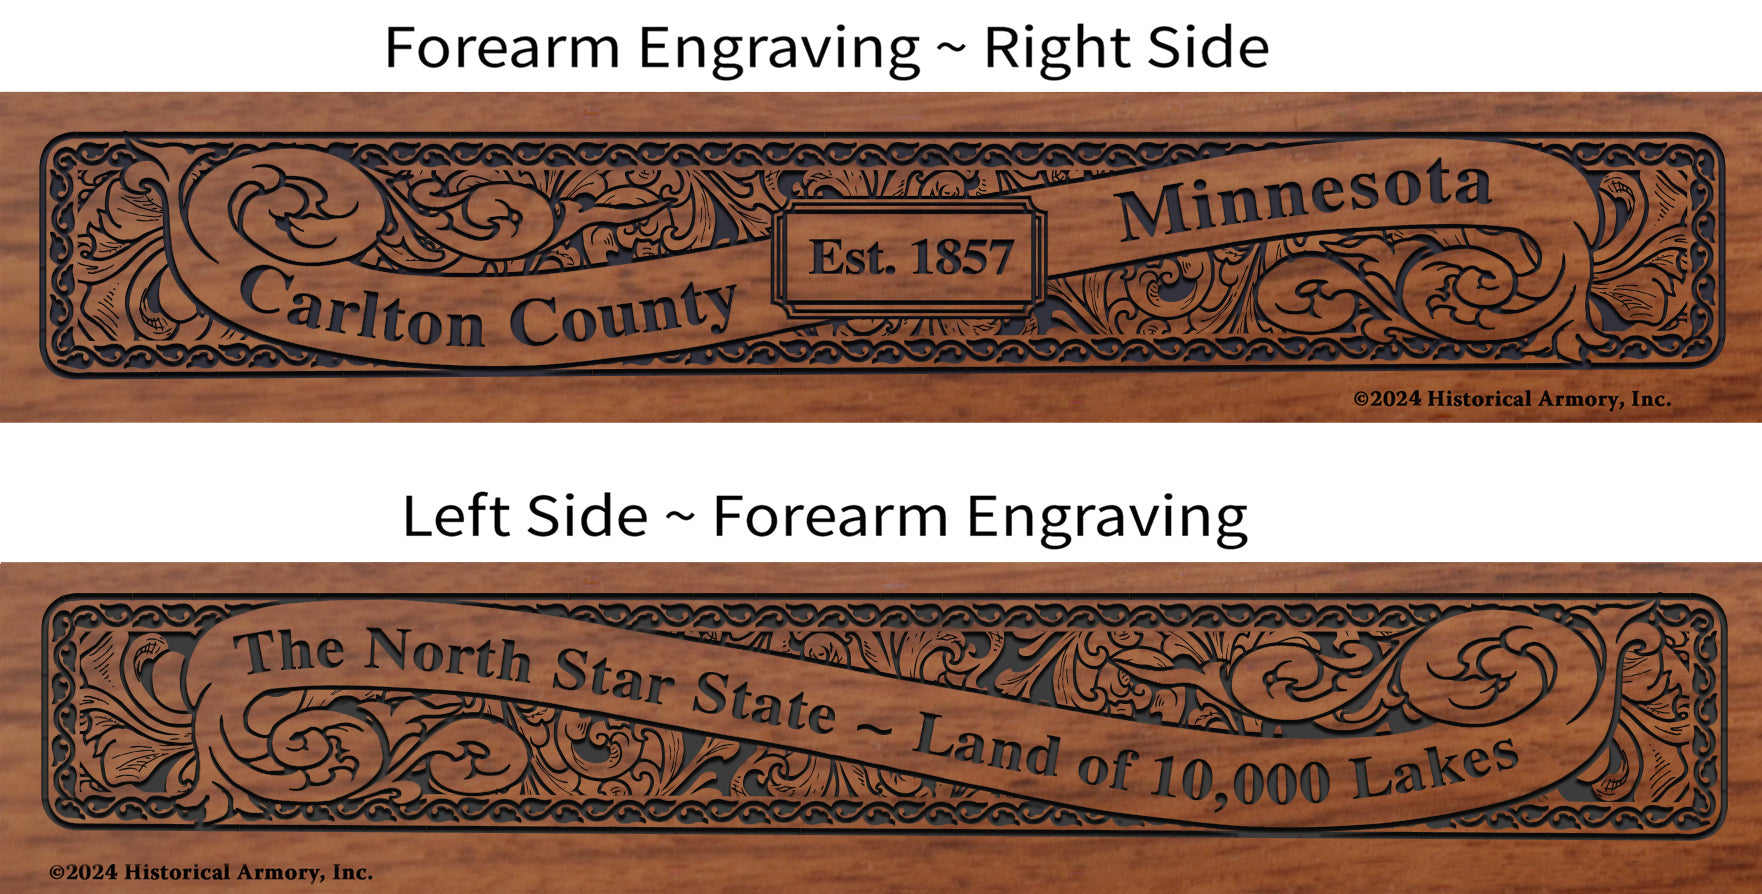 Carlton County Minnesota Engraved Rifle Forearm